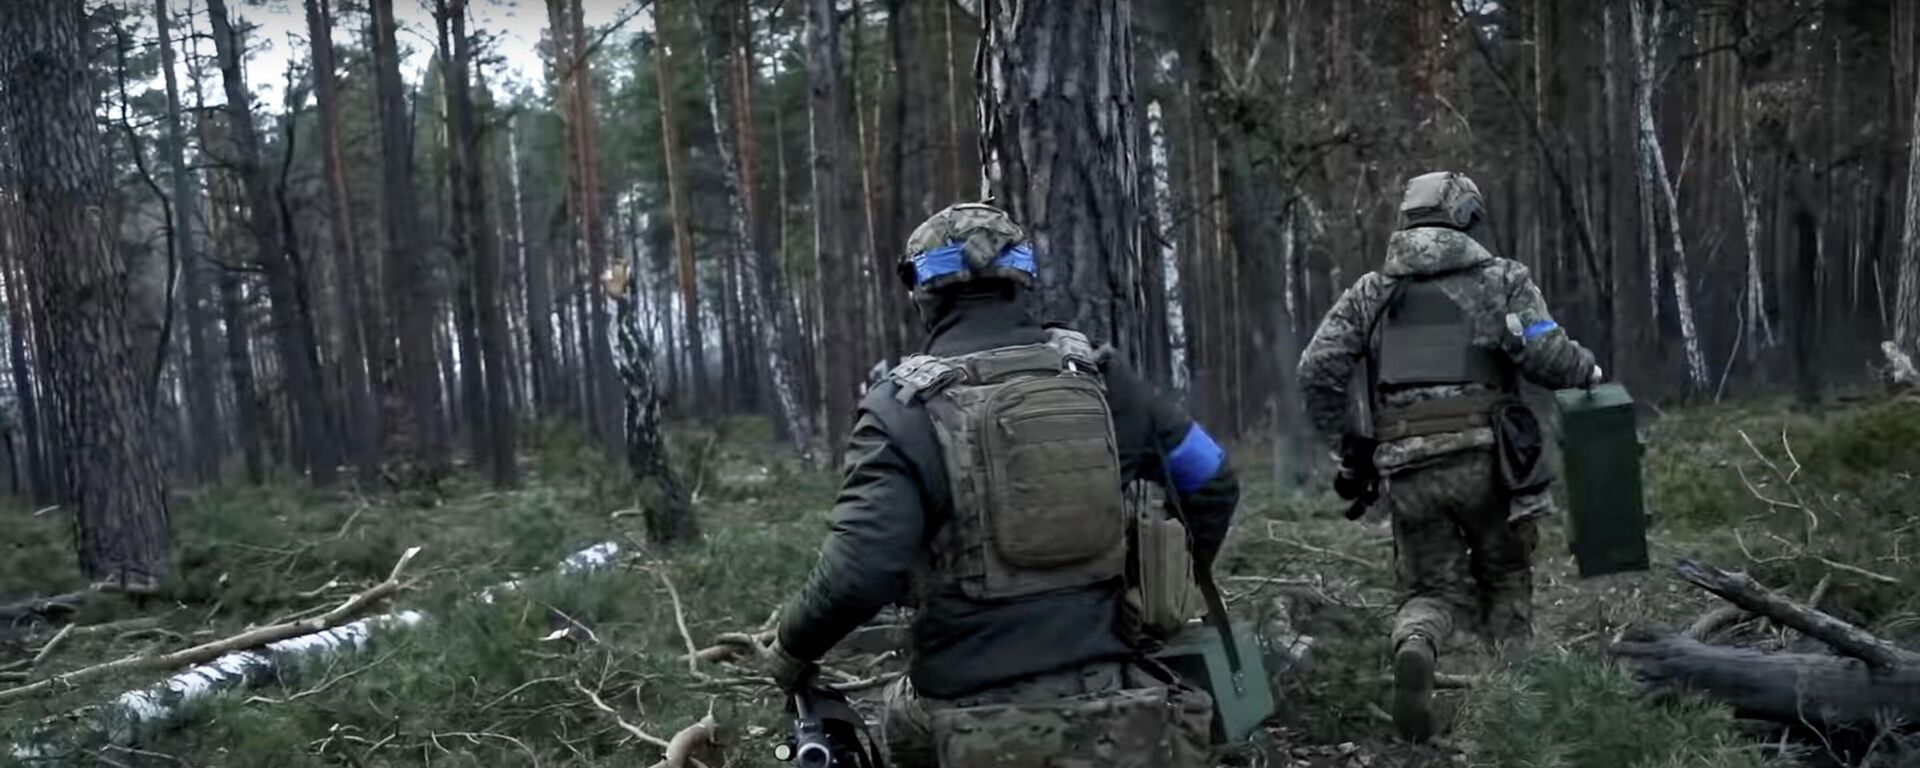 Militares ucranianos cruzan un bosque - Sputnik Mundo, 1920, 22.03.2022